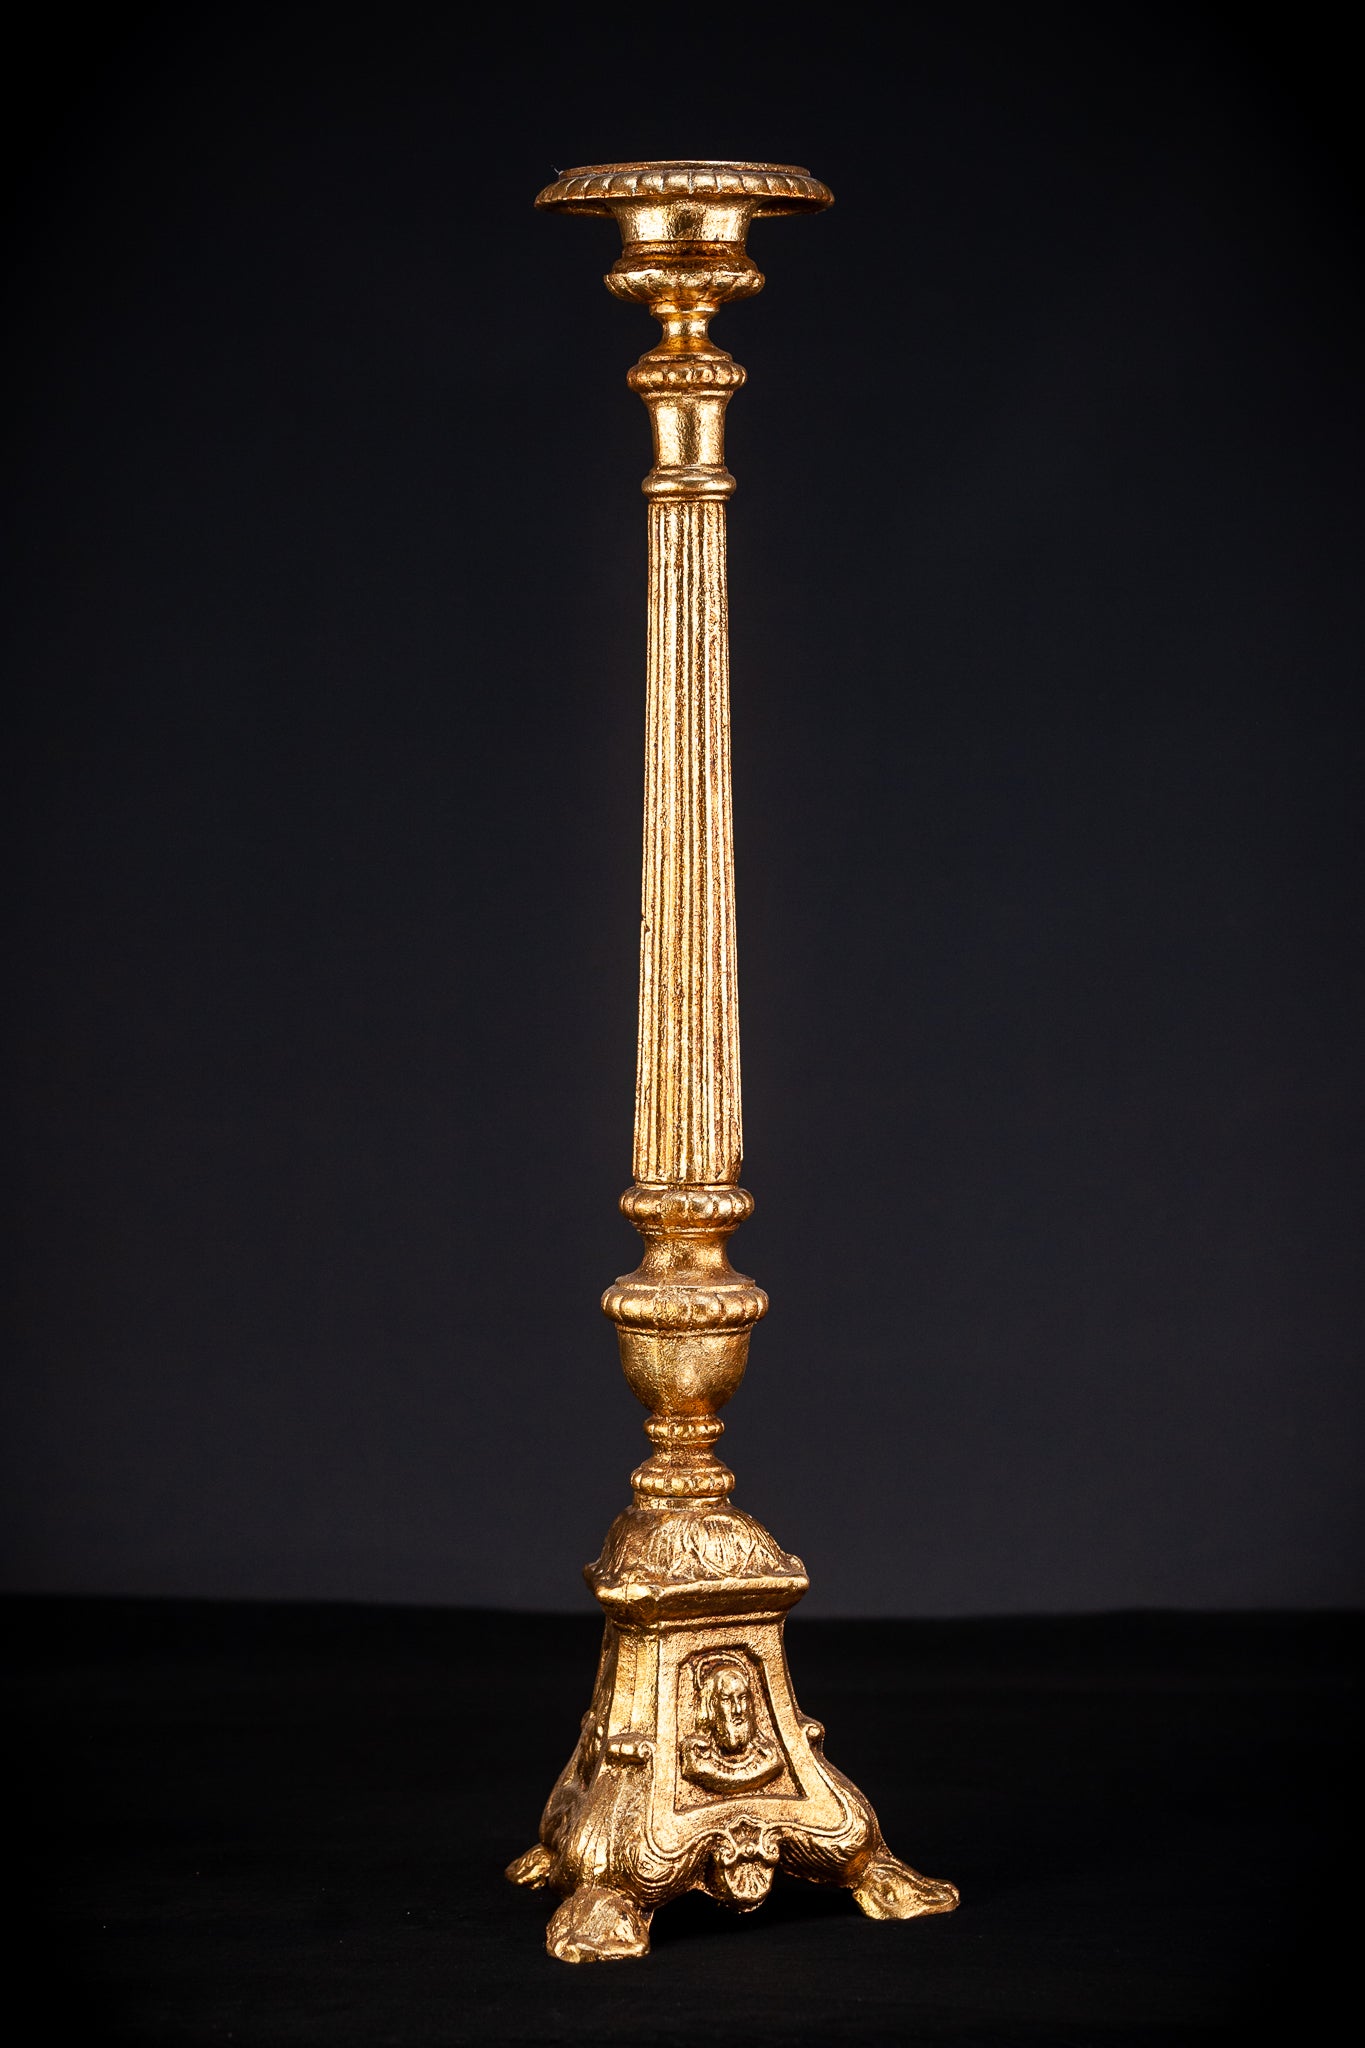 Pair of Gilded Cast Iron Candlesticks | 1800s Antique | 27.6" / 70 cm